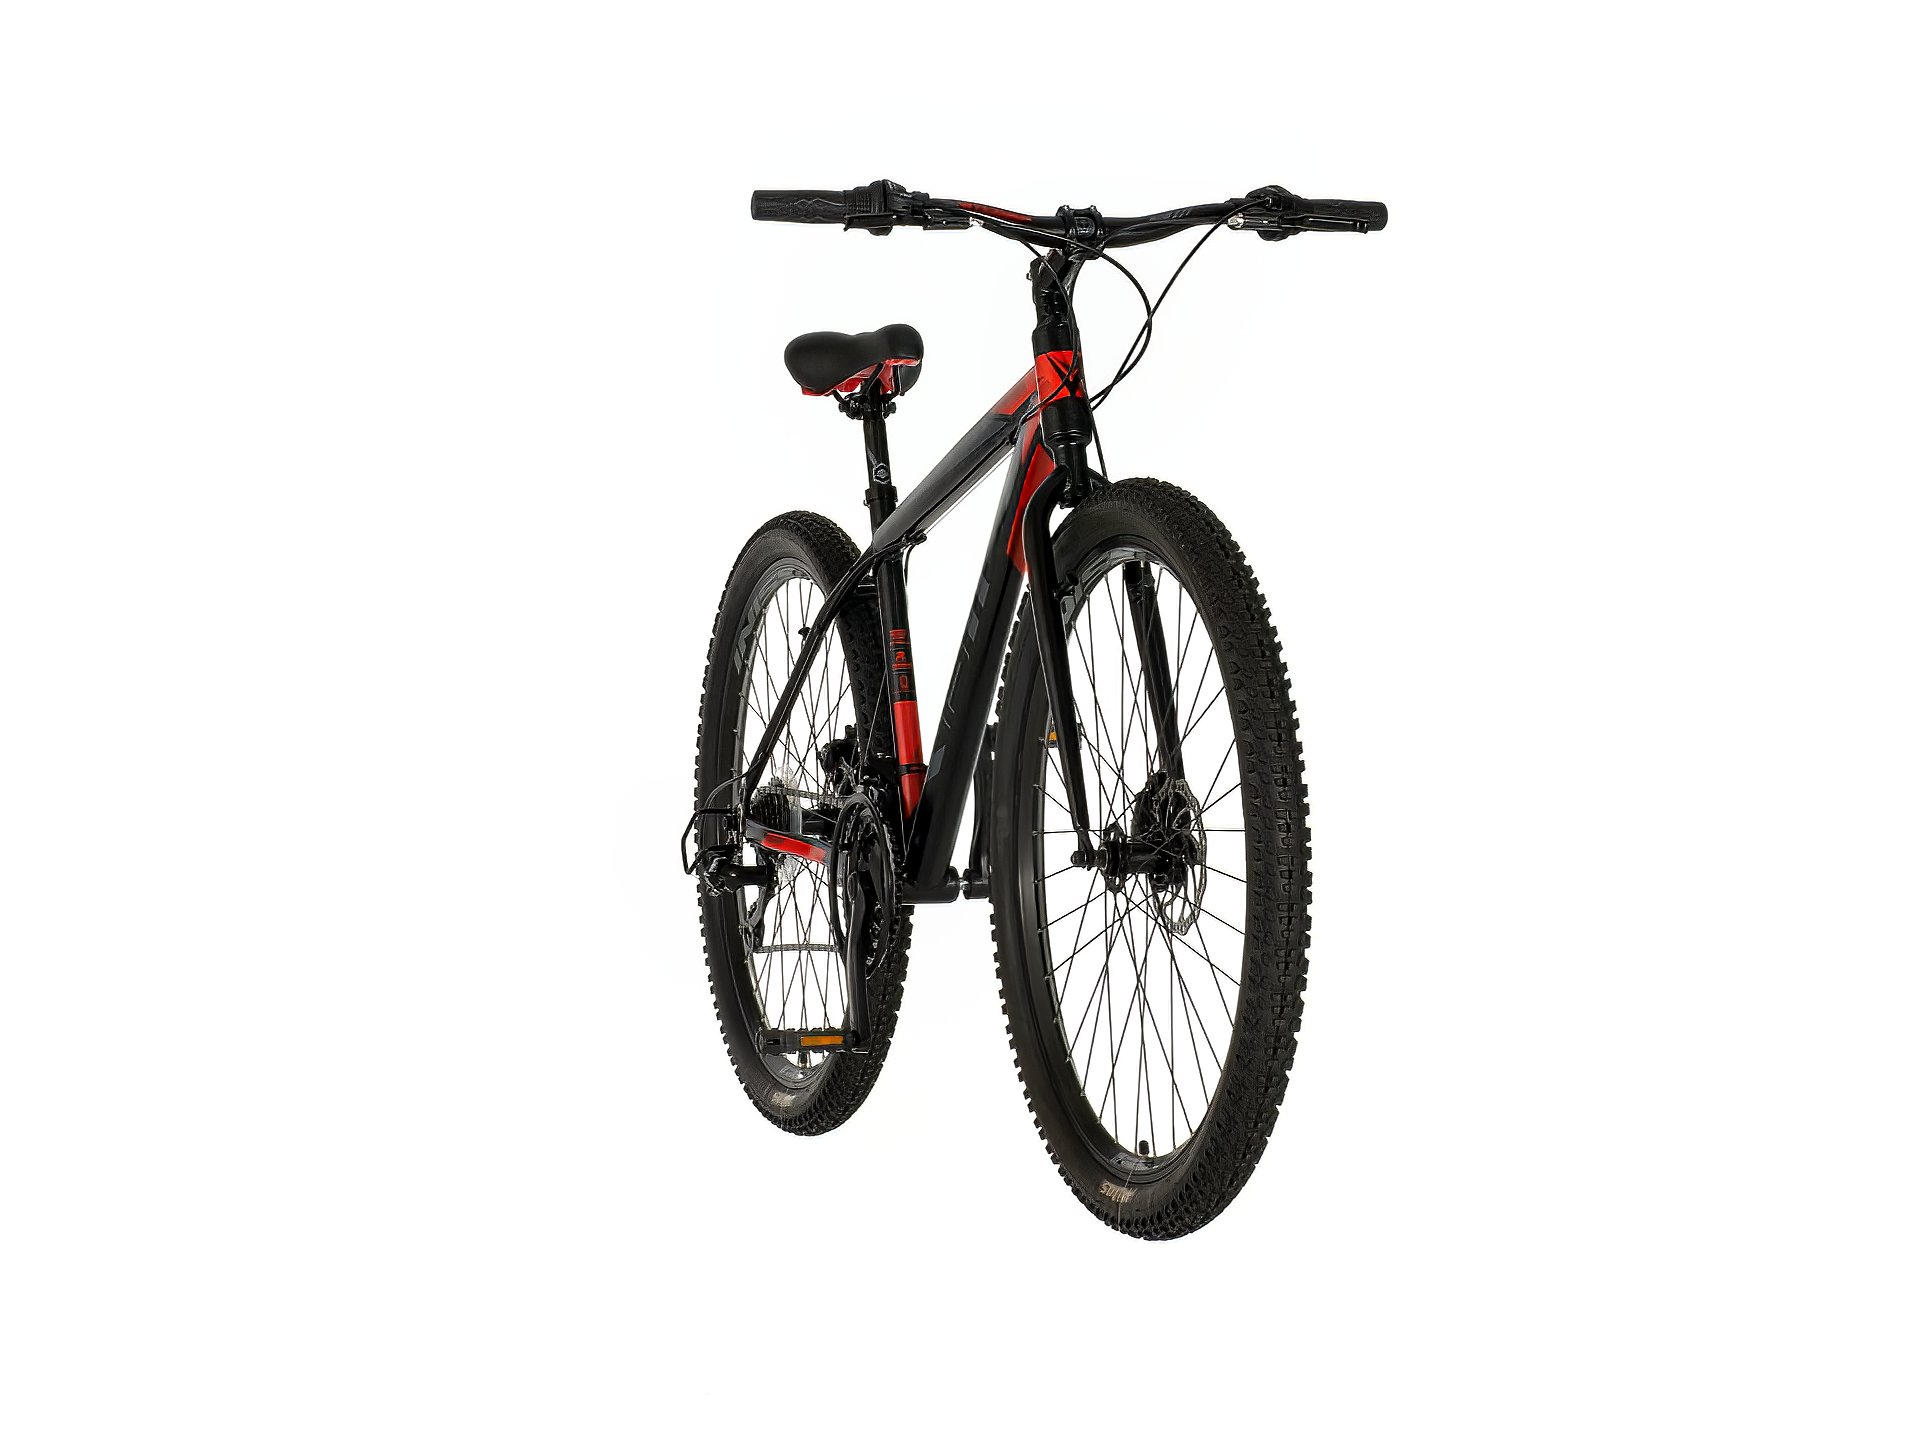 Crno crvena nitro bicikla -nit292d2